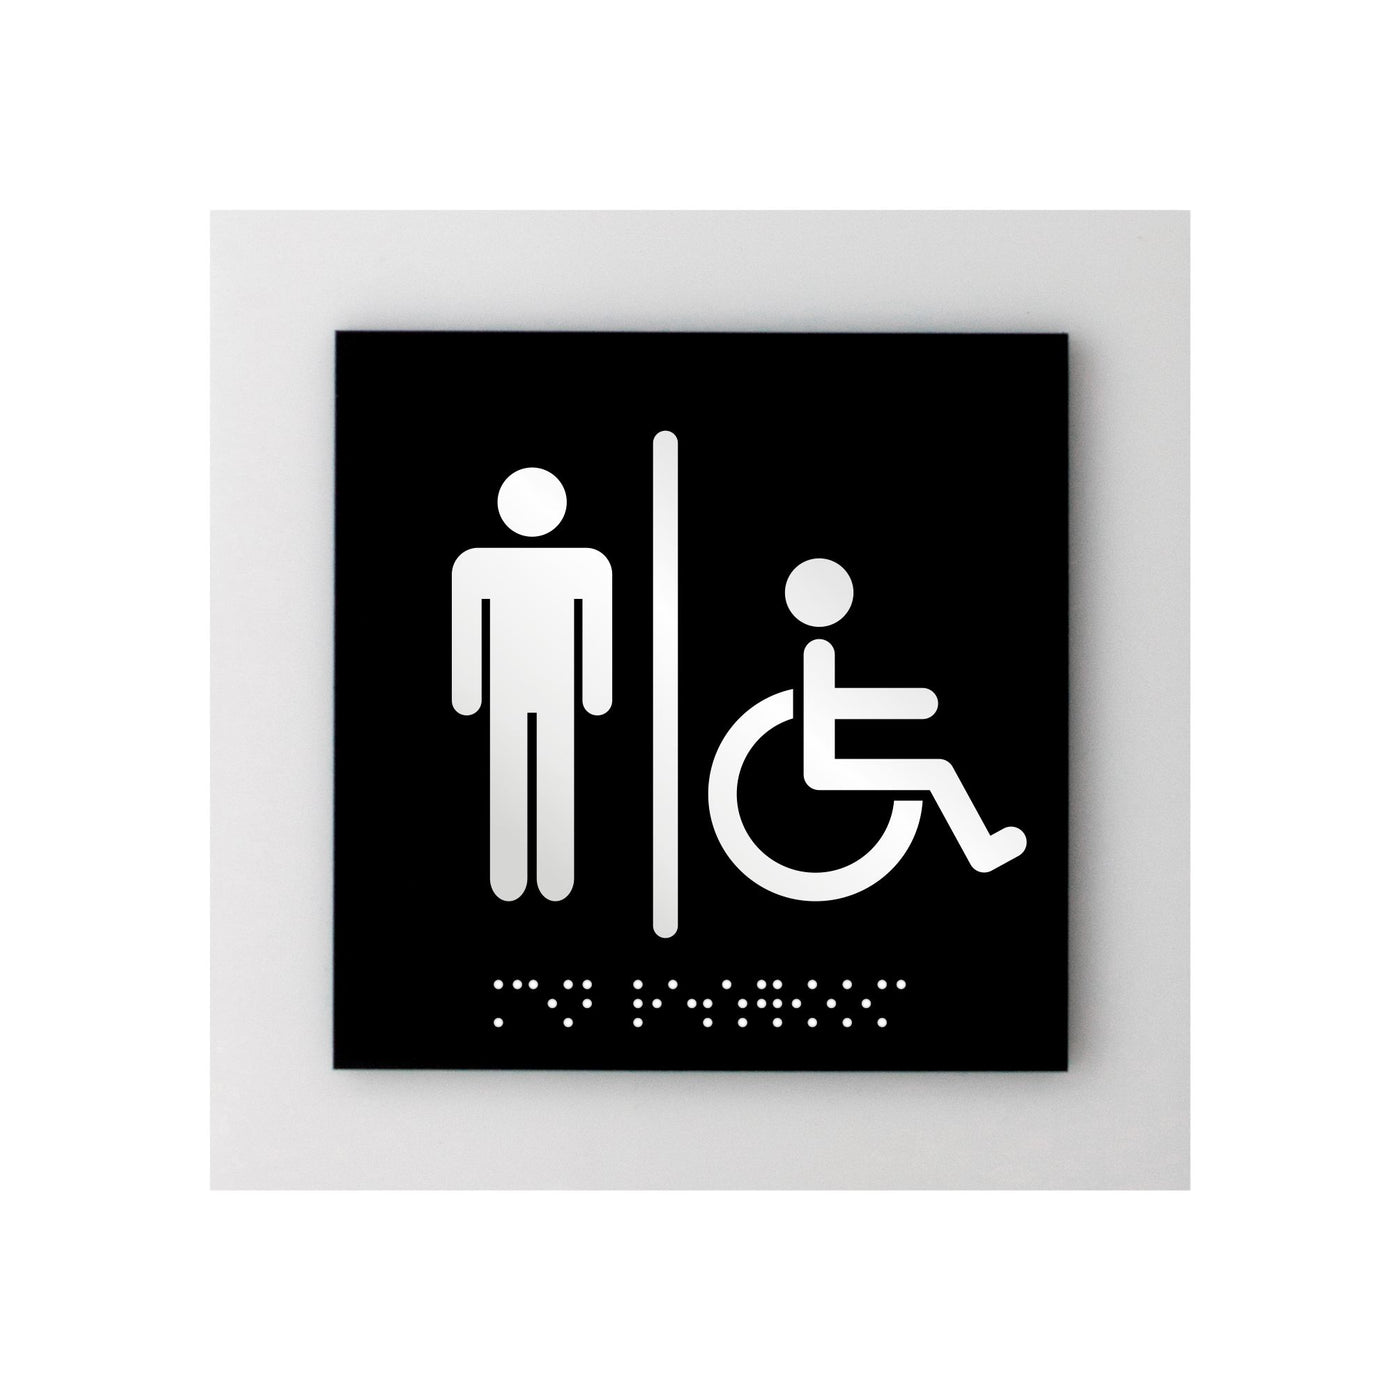 Acrylic Men & Wheelchair Restroom Sign - "Simple" Design